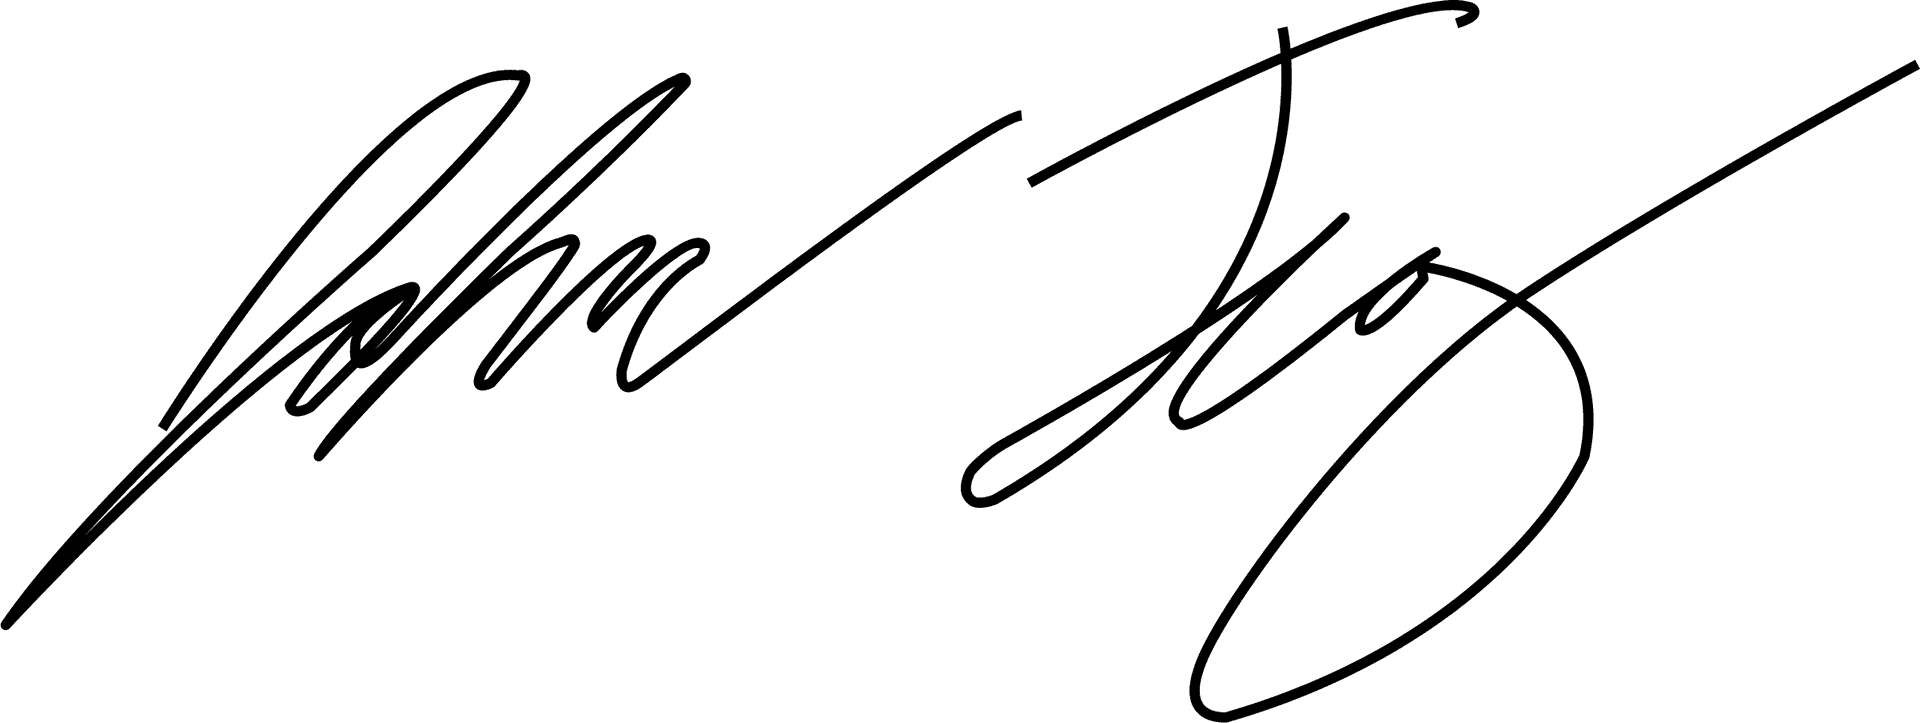 Michael Jackson Signature PNG image